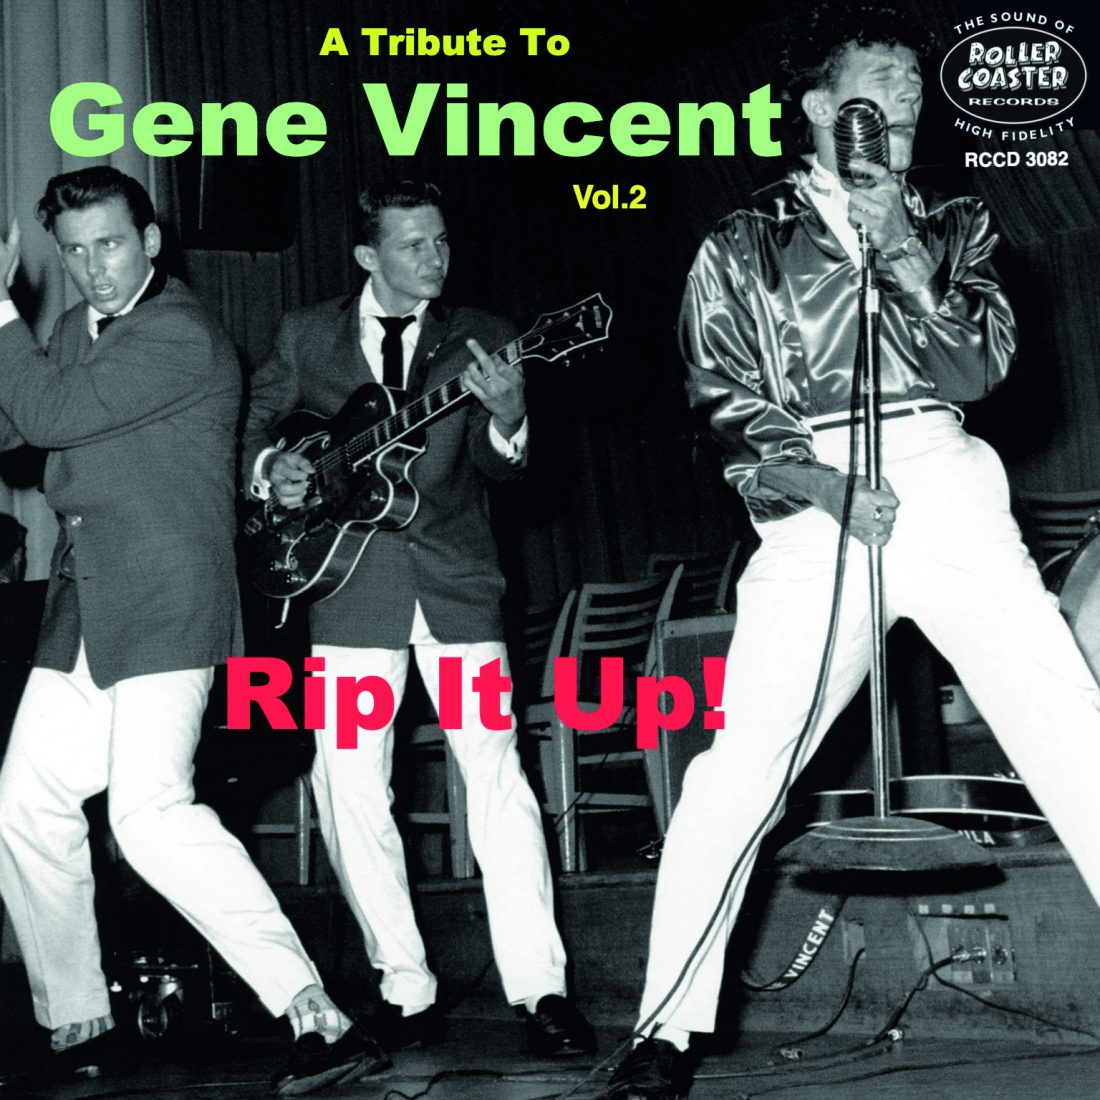 Steve Aynsley talks Gene Vincent